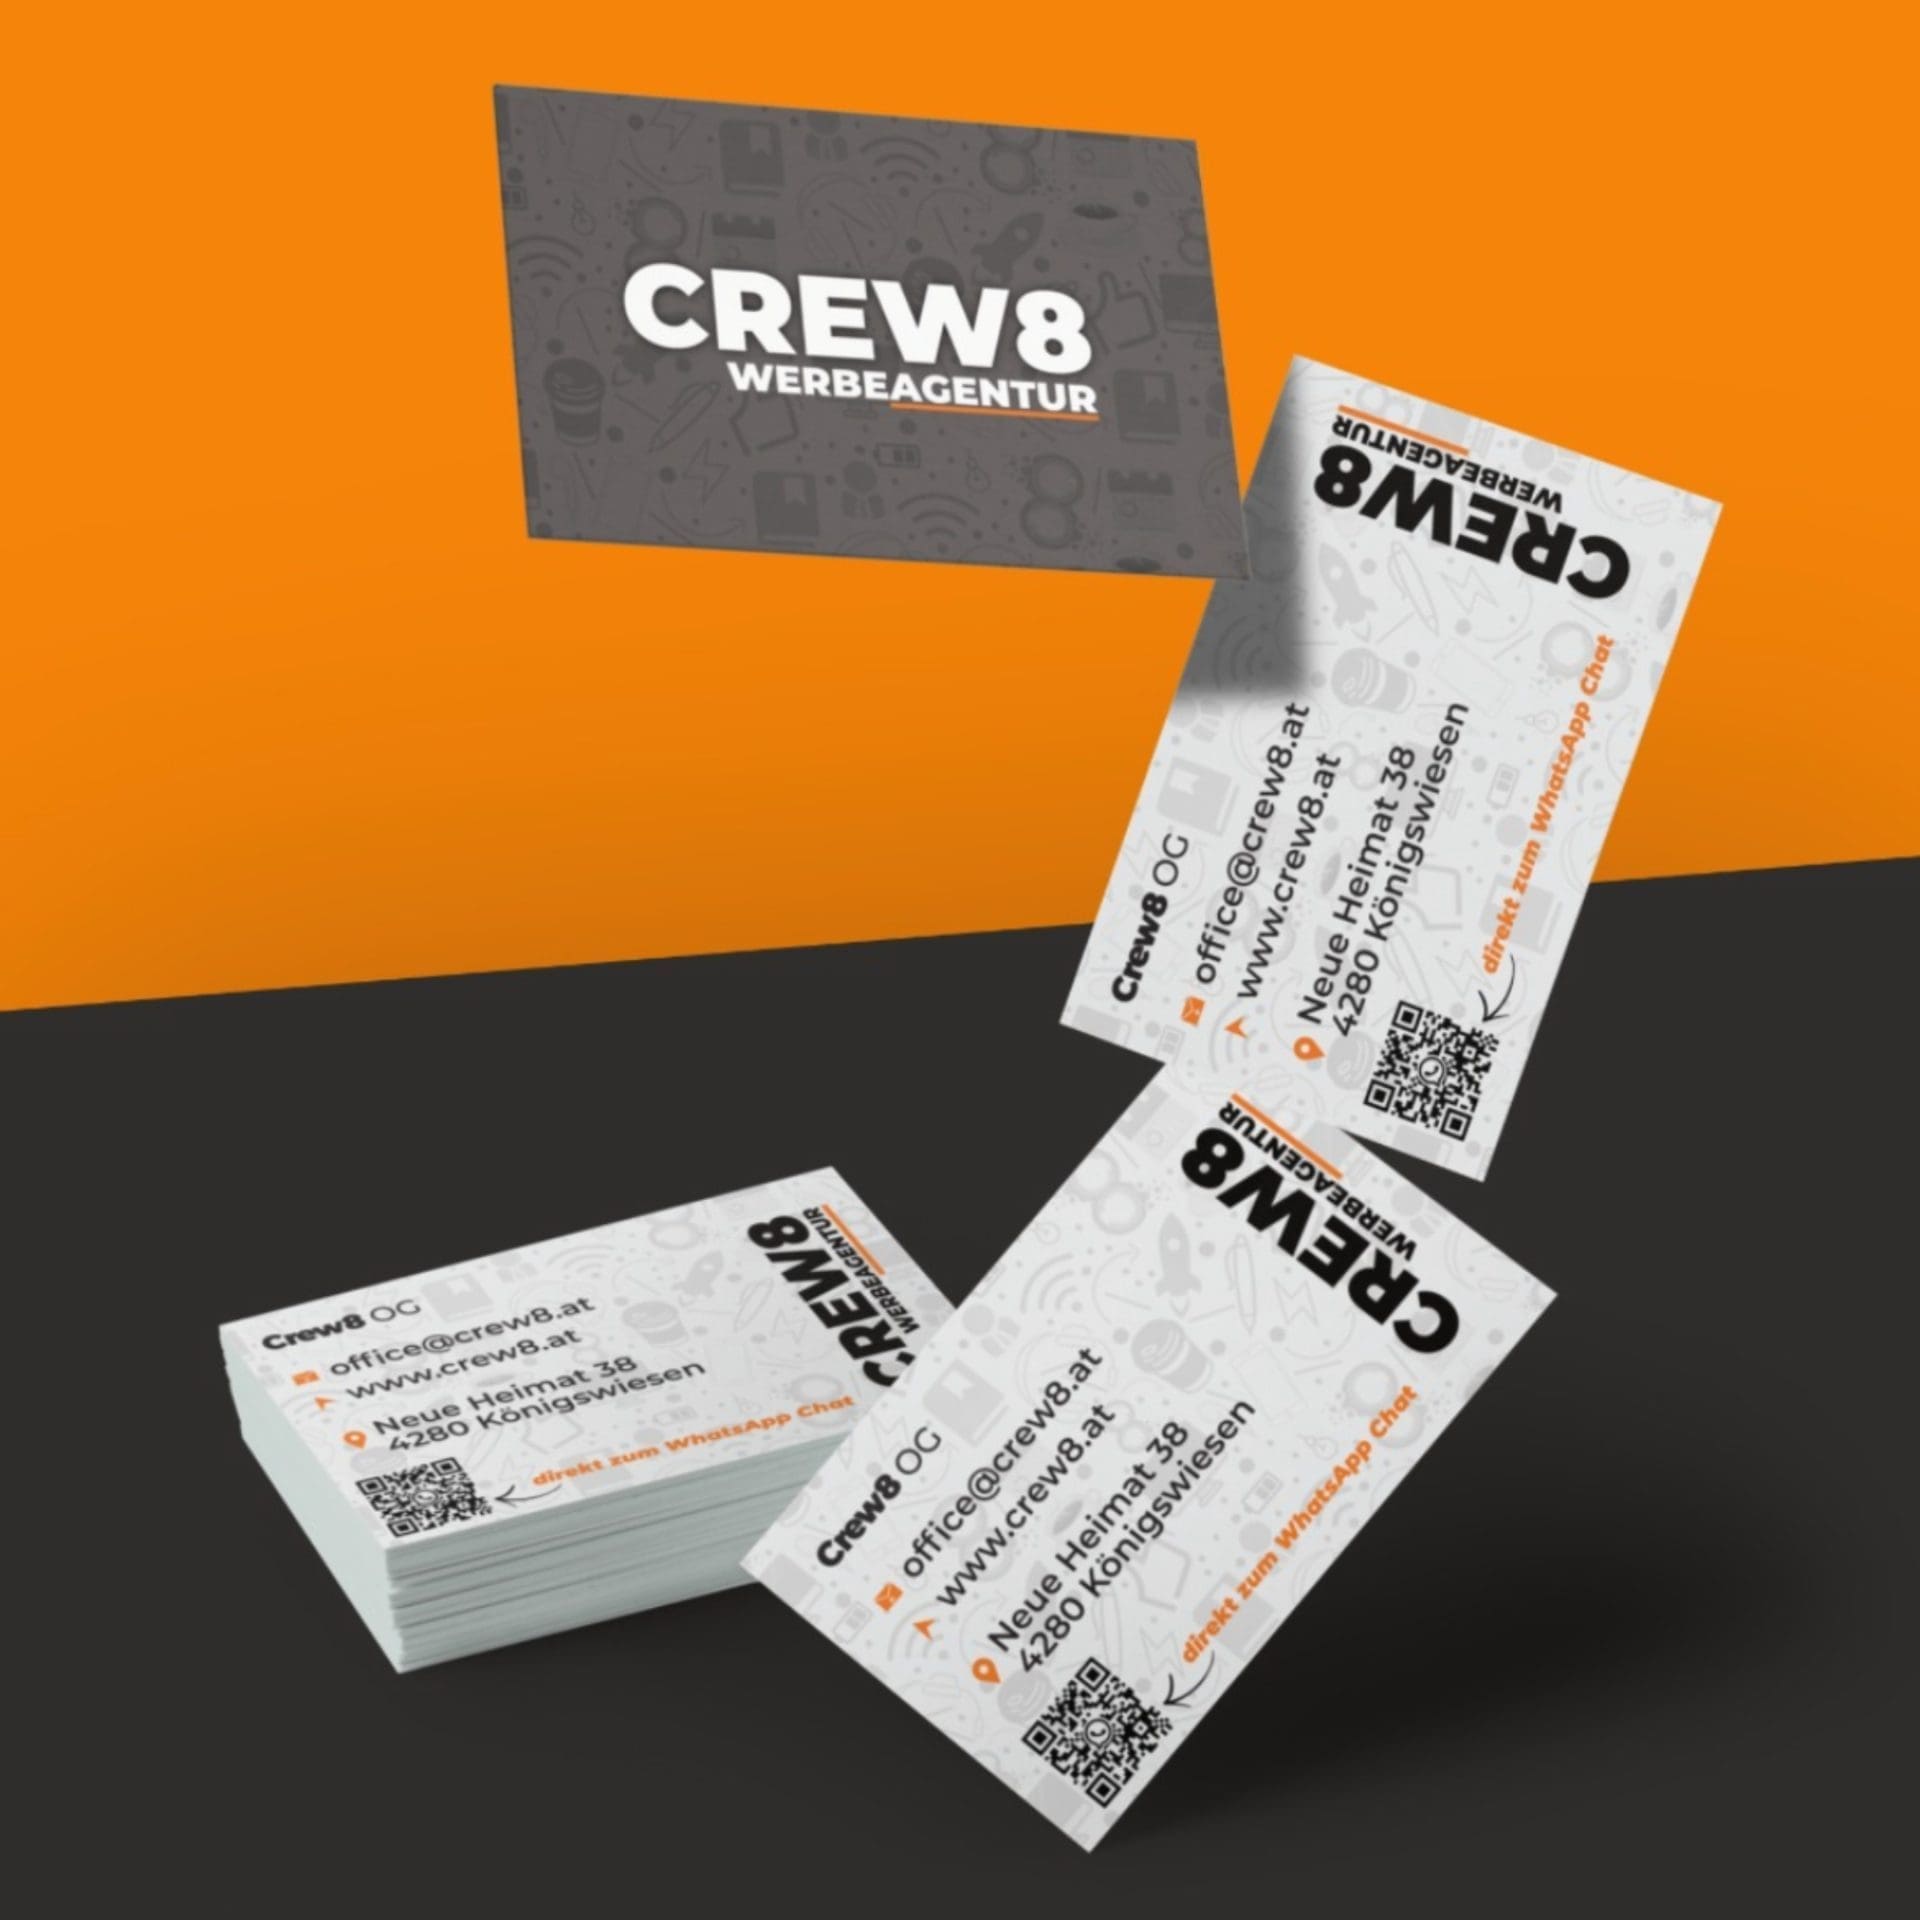 CREW8 Visitenkarten – Design & Umsetzung